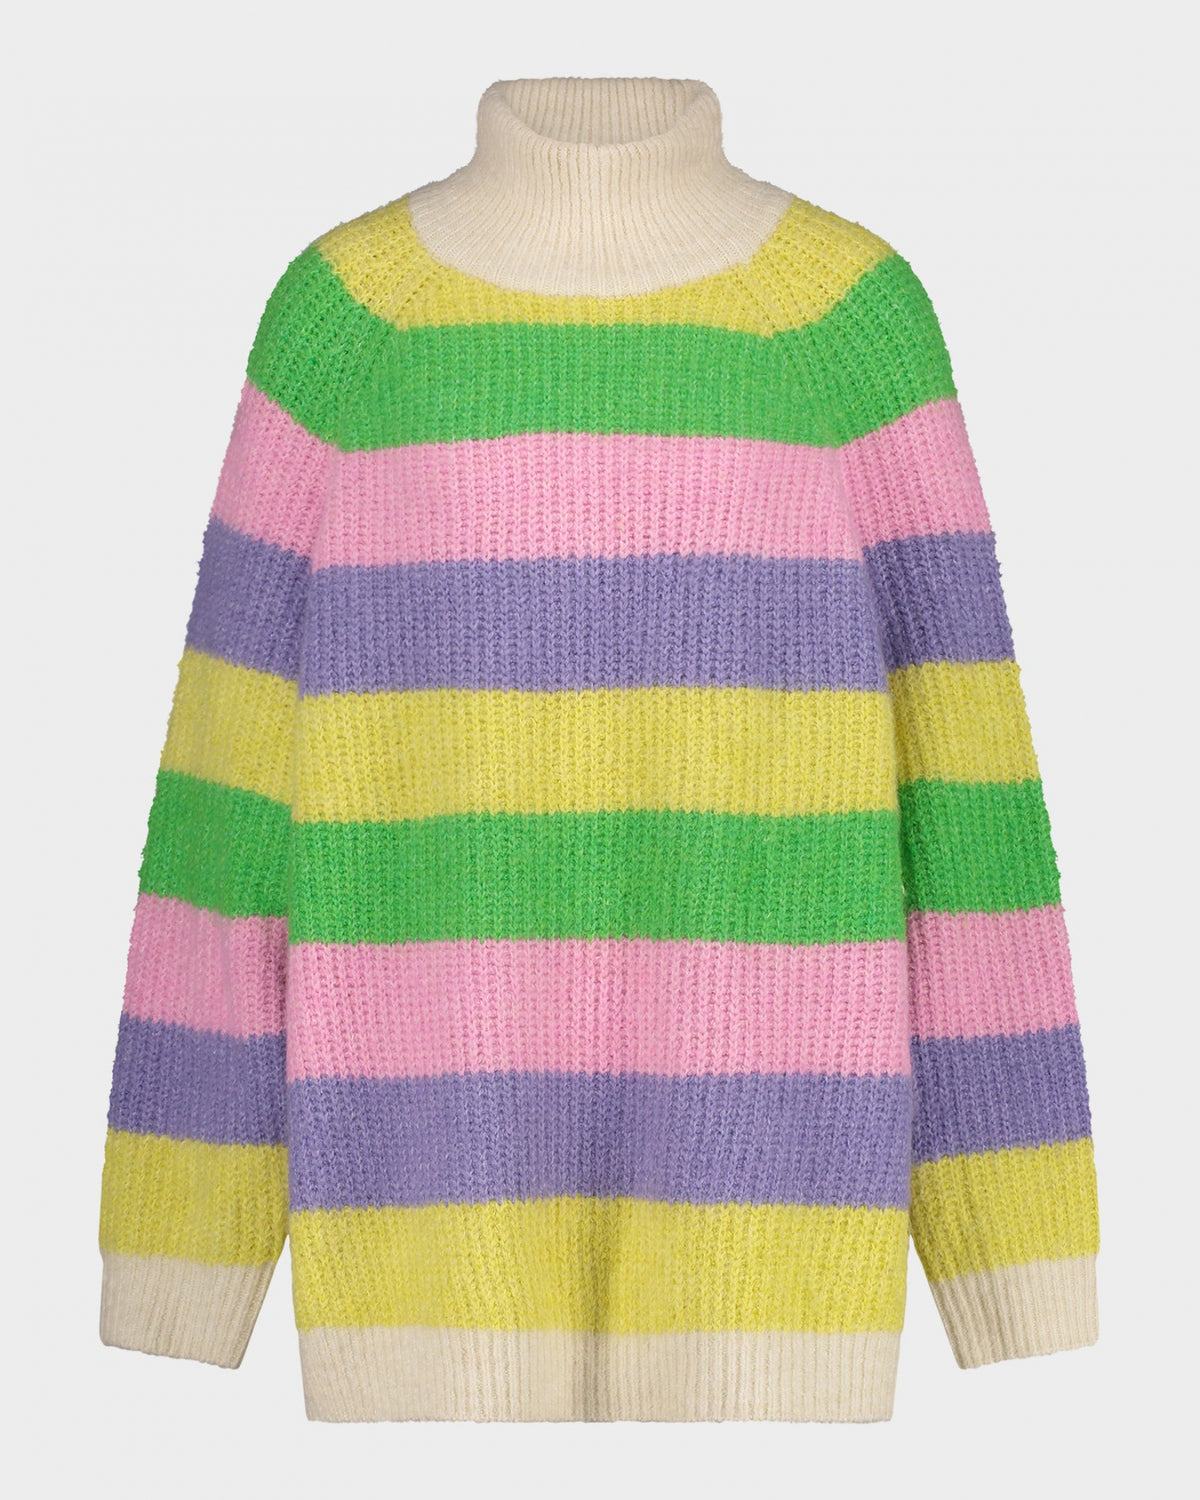 Merida Knitted Sweater | Multi